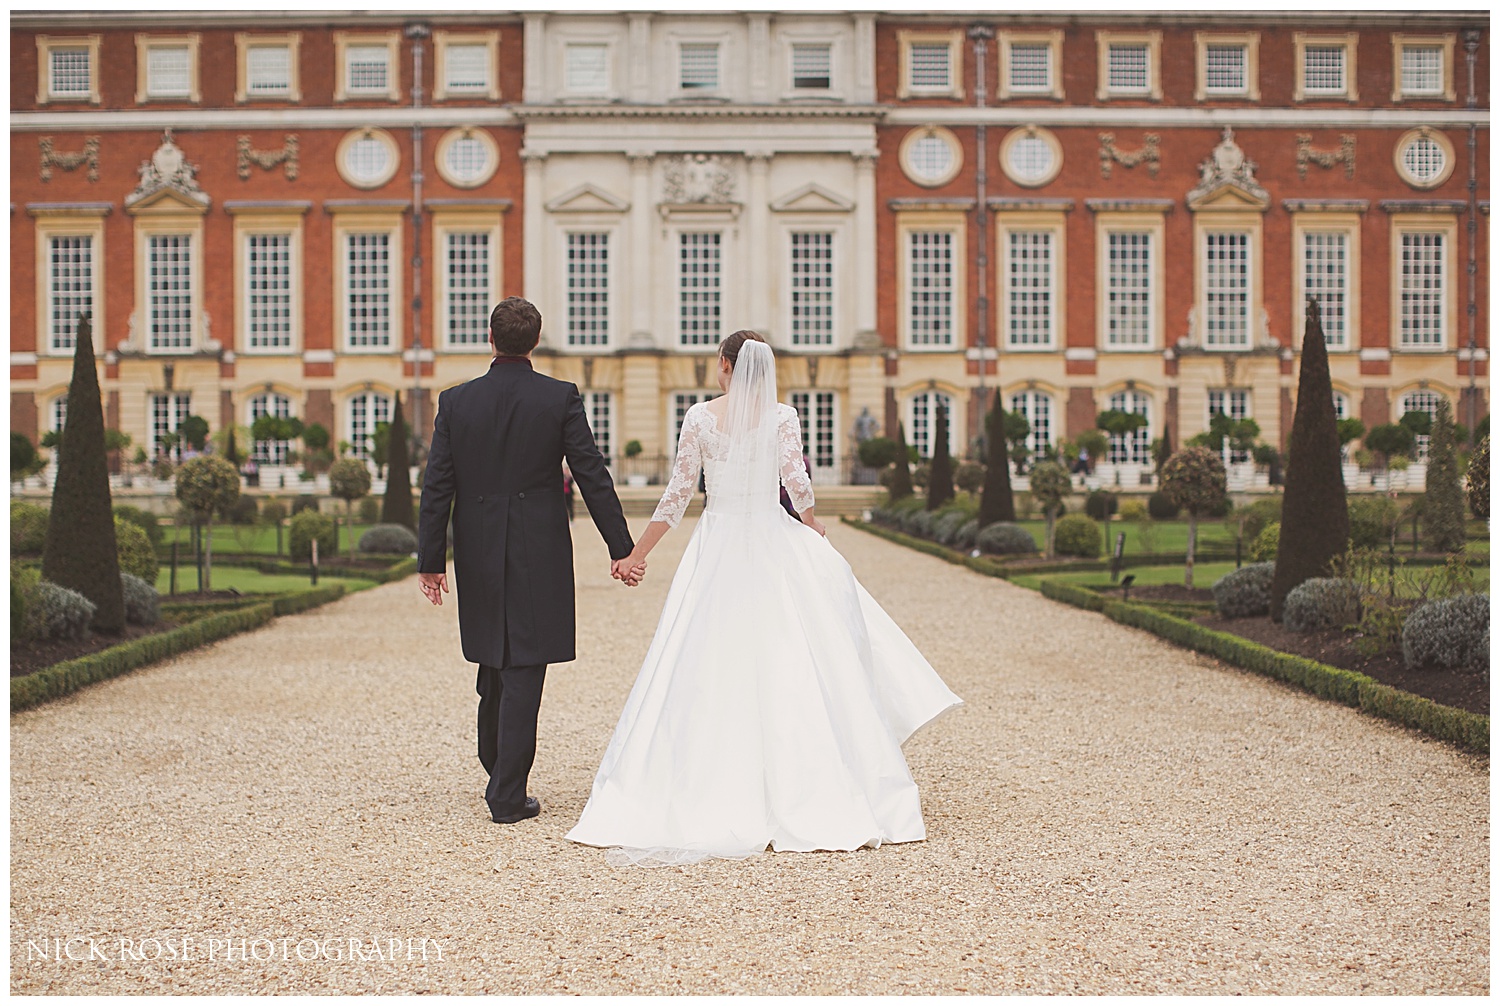 Hampton Court Palace wedding photographer